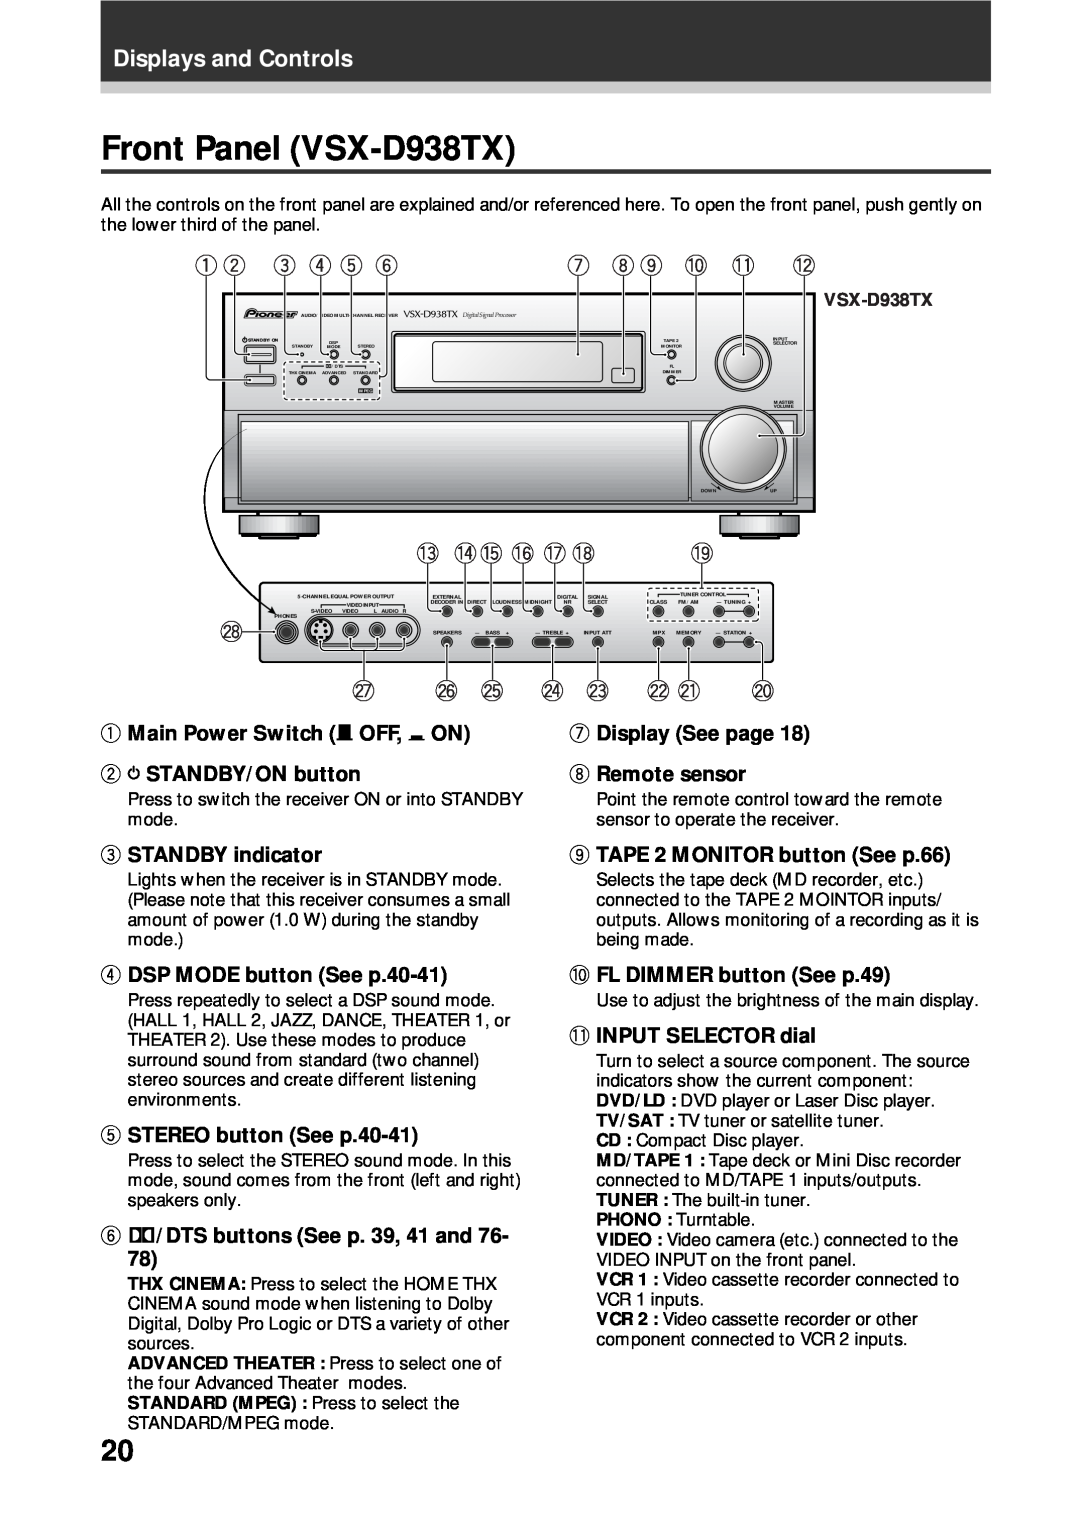 Pioneer VSX-D908TX manual Front Panel VSX-D938TX, Displays and Controls, 1 2 3 4 5, 7 8 9 0 - =, ~ !@ # $ %, ª Á+, _ 